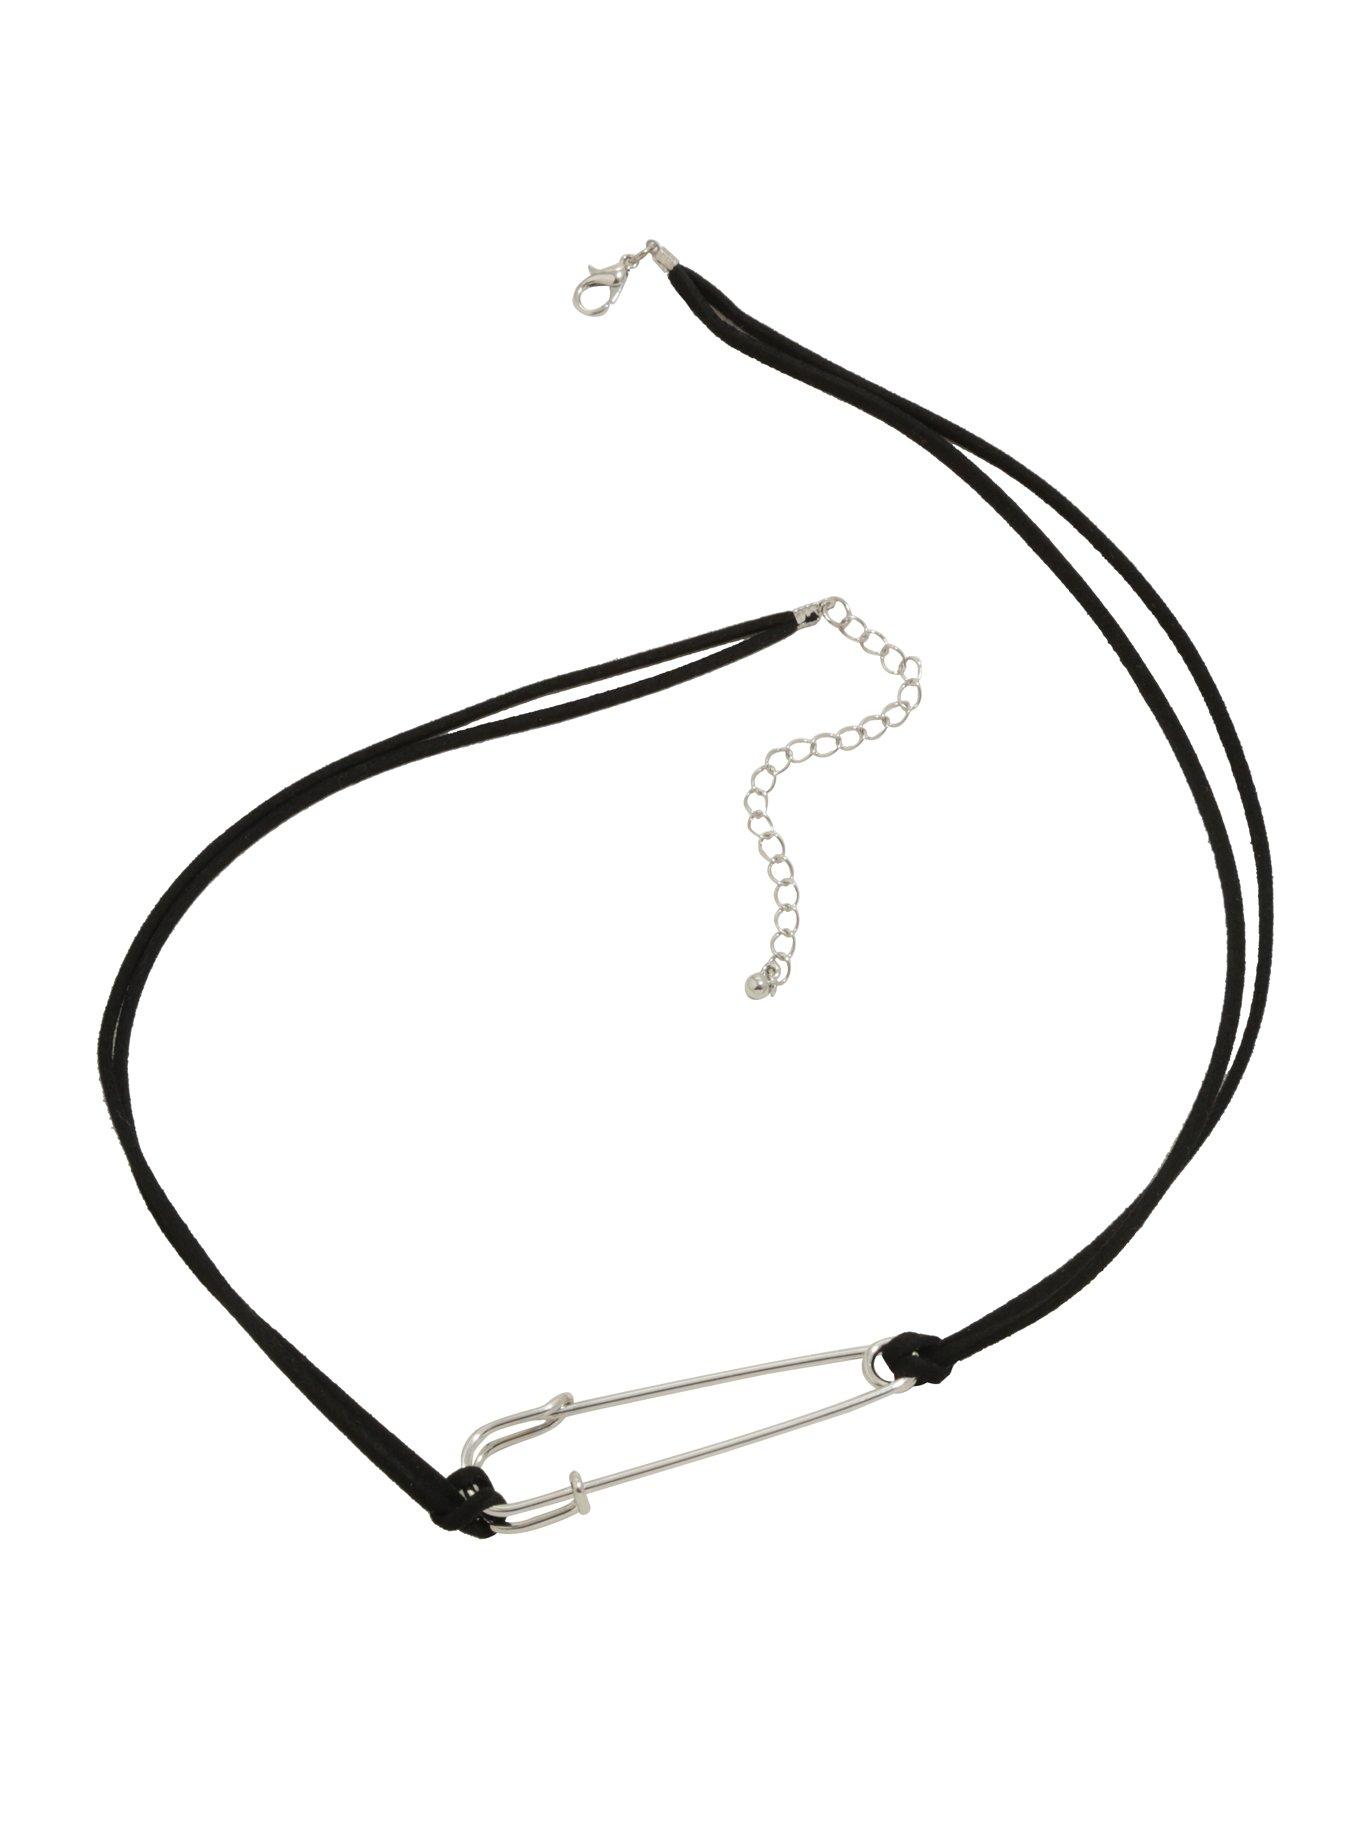 Blackheart Safety Pin Suede Wrap Bracelet, , alternate